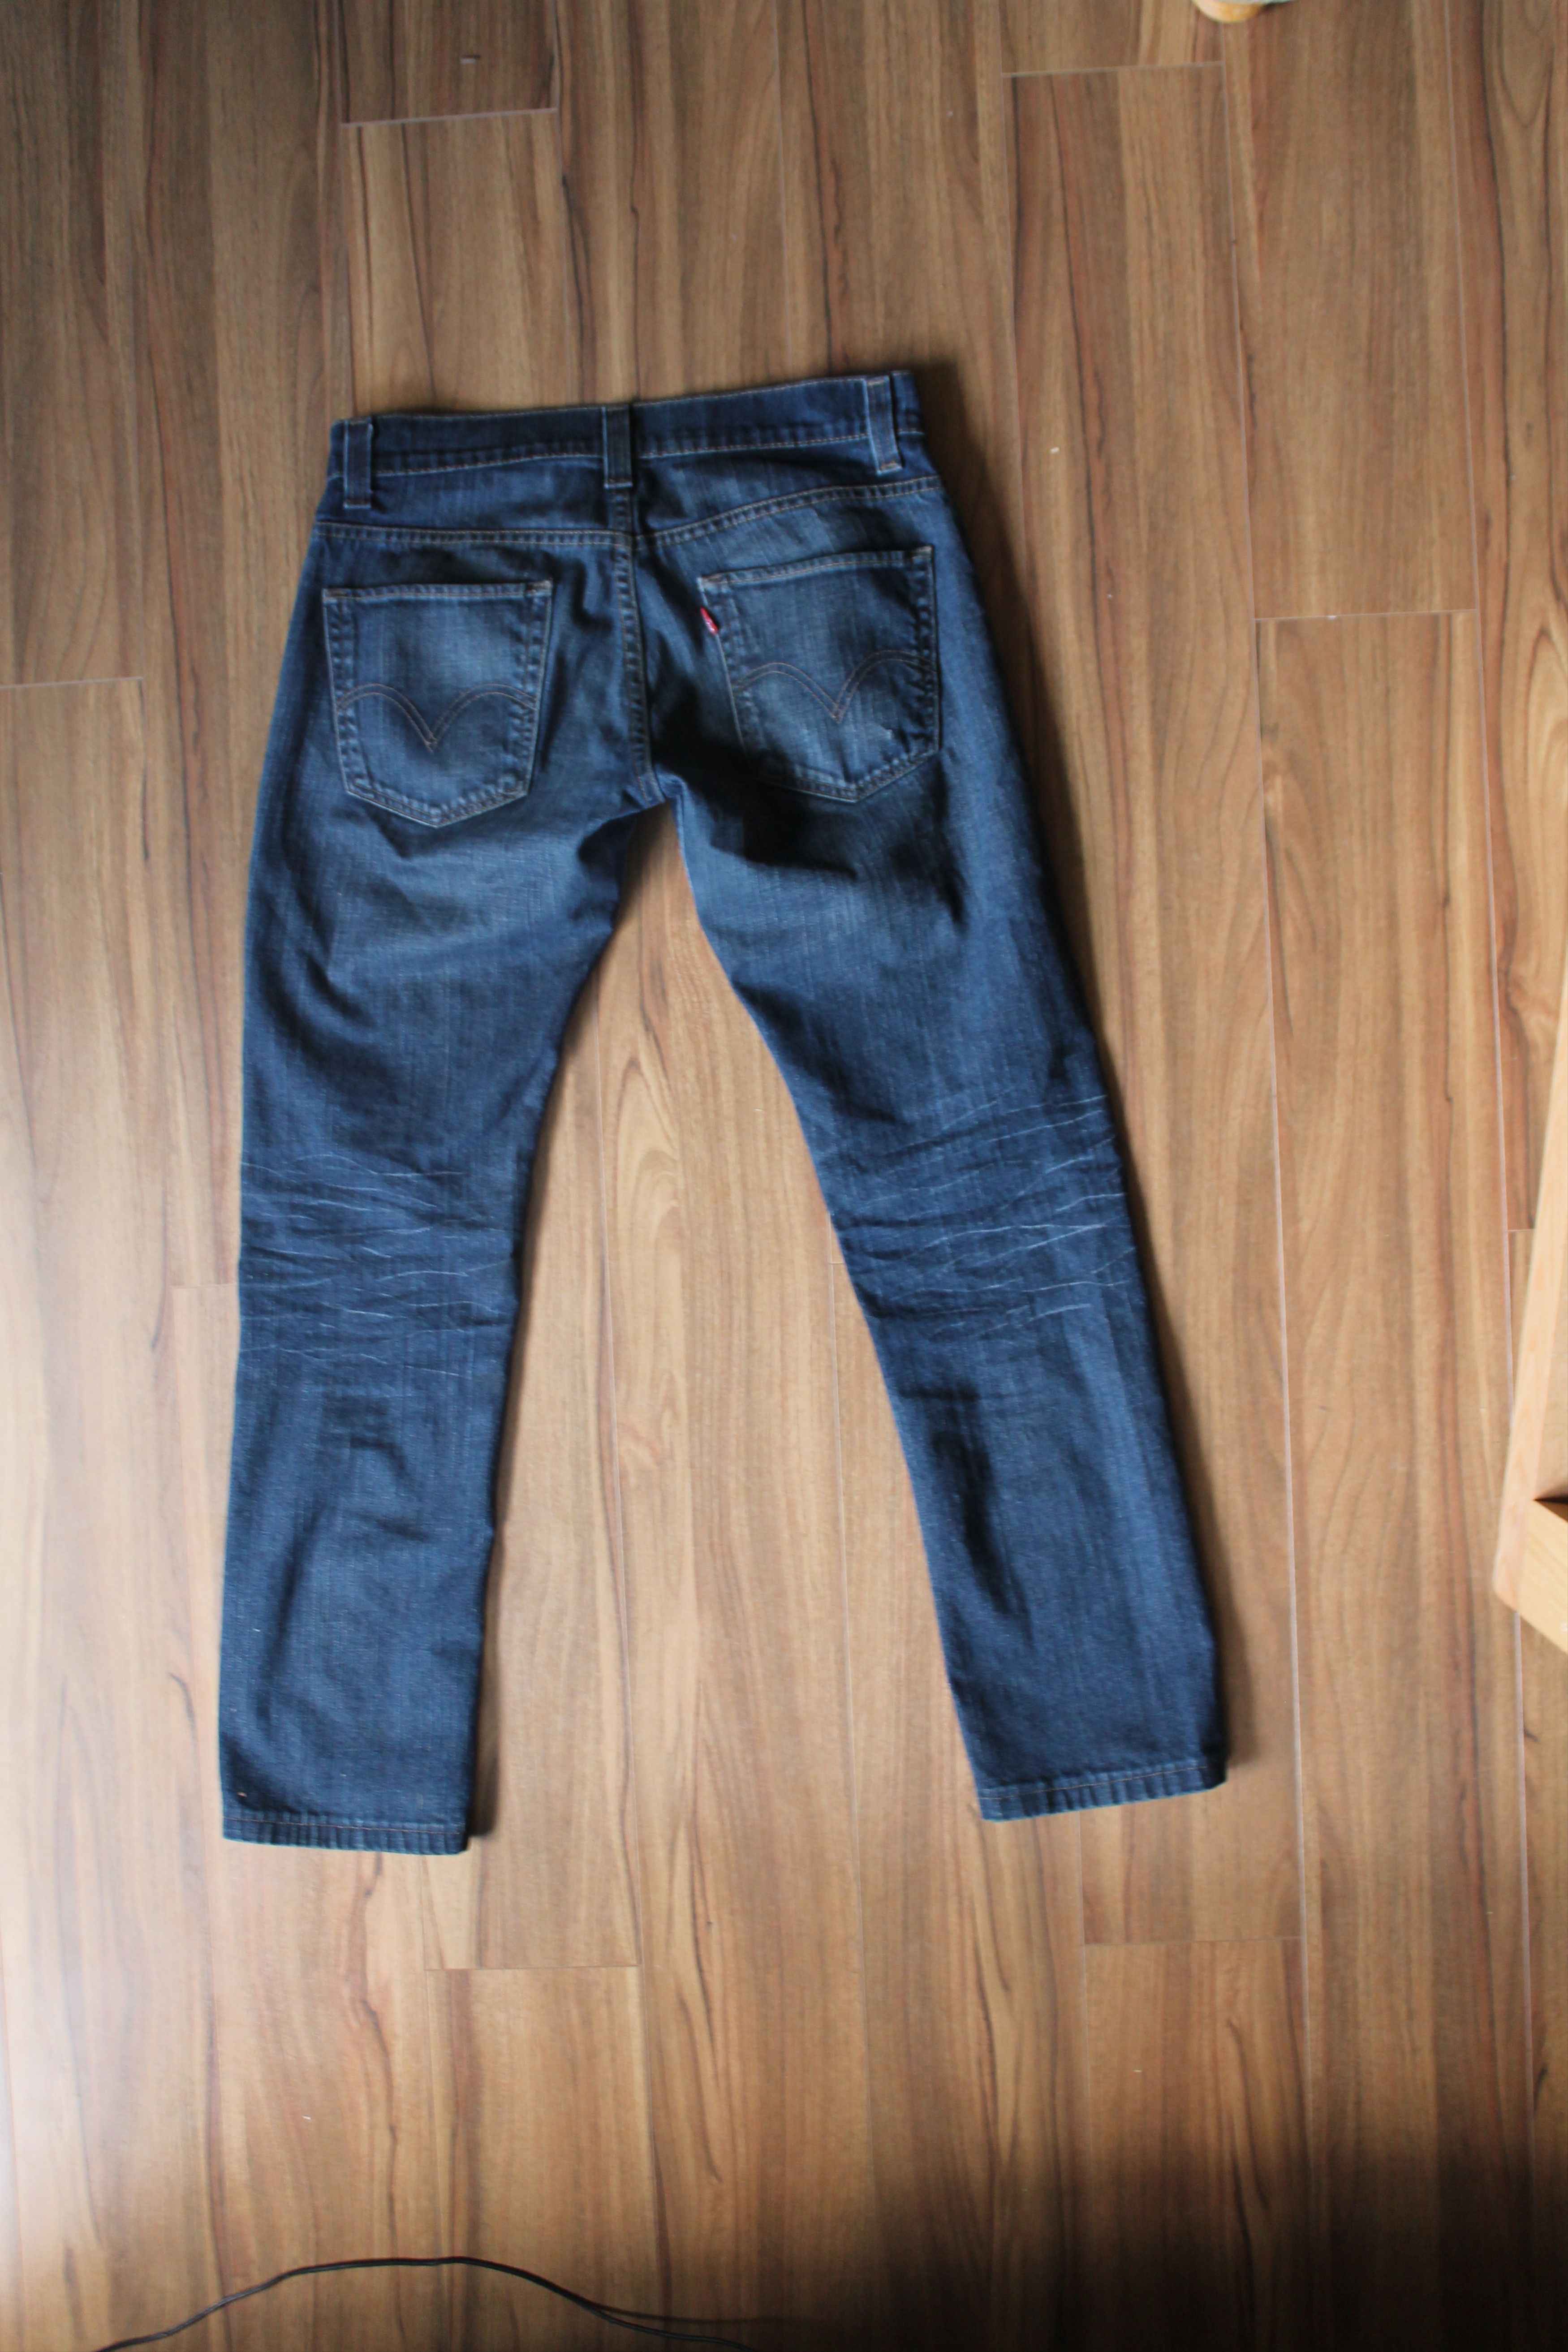 Levi's Navy Blue Levi's 511 Selvedge Denim Jeans (29x30) Size US 29 - 4 Thumbnail